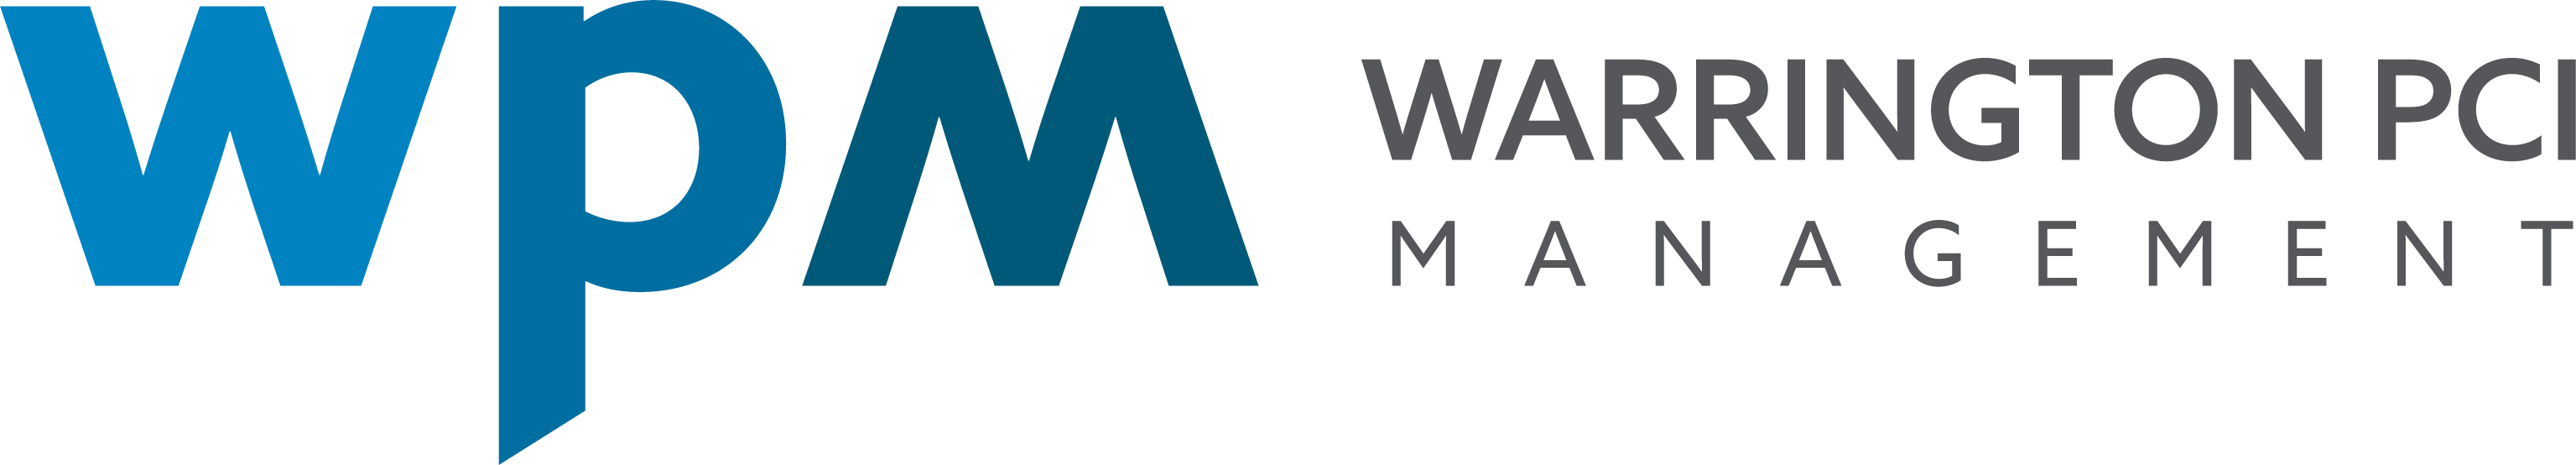 Warrington PCI Management logo